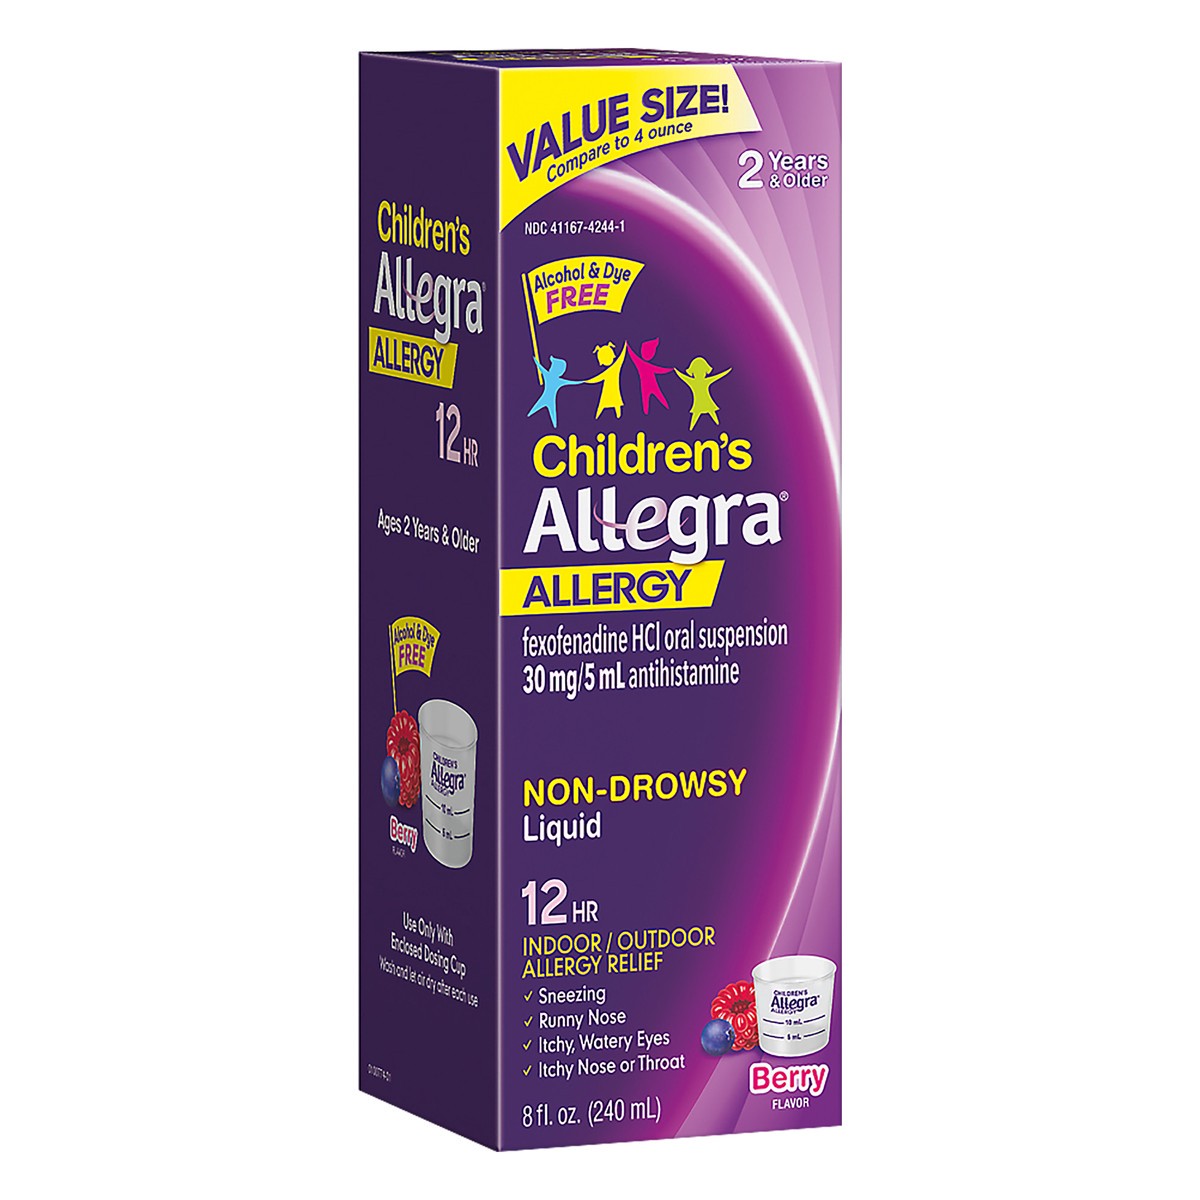 slide 5 of 9, Allegra Value Size Liquid 12 Hr Non-Drowsy Children's Berry Flavor Allergy 8 oz, 8 oz